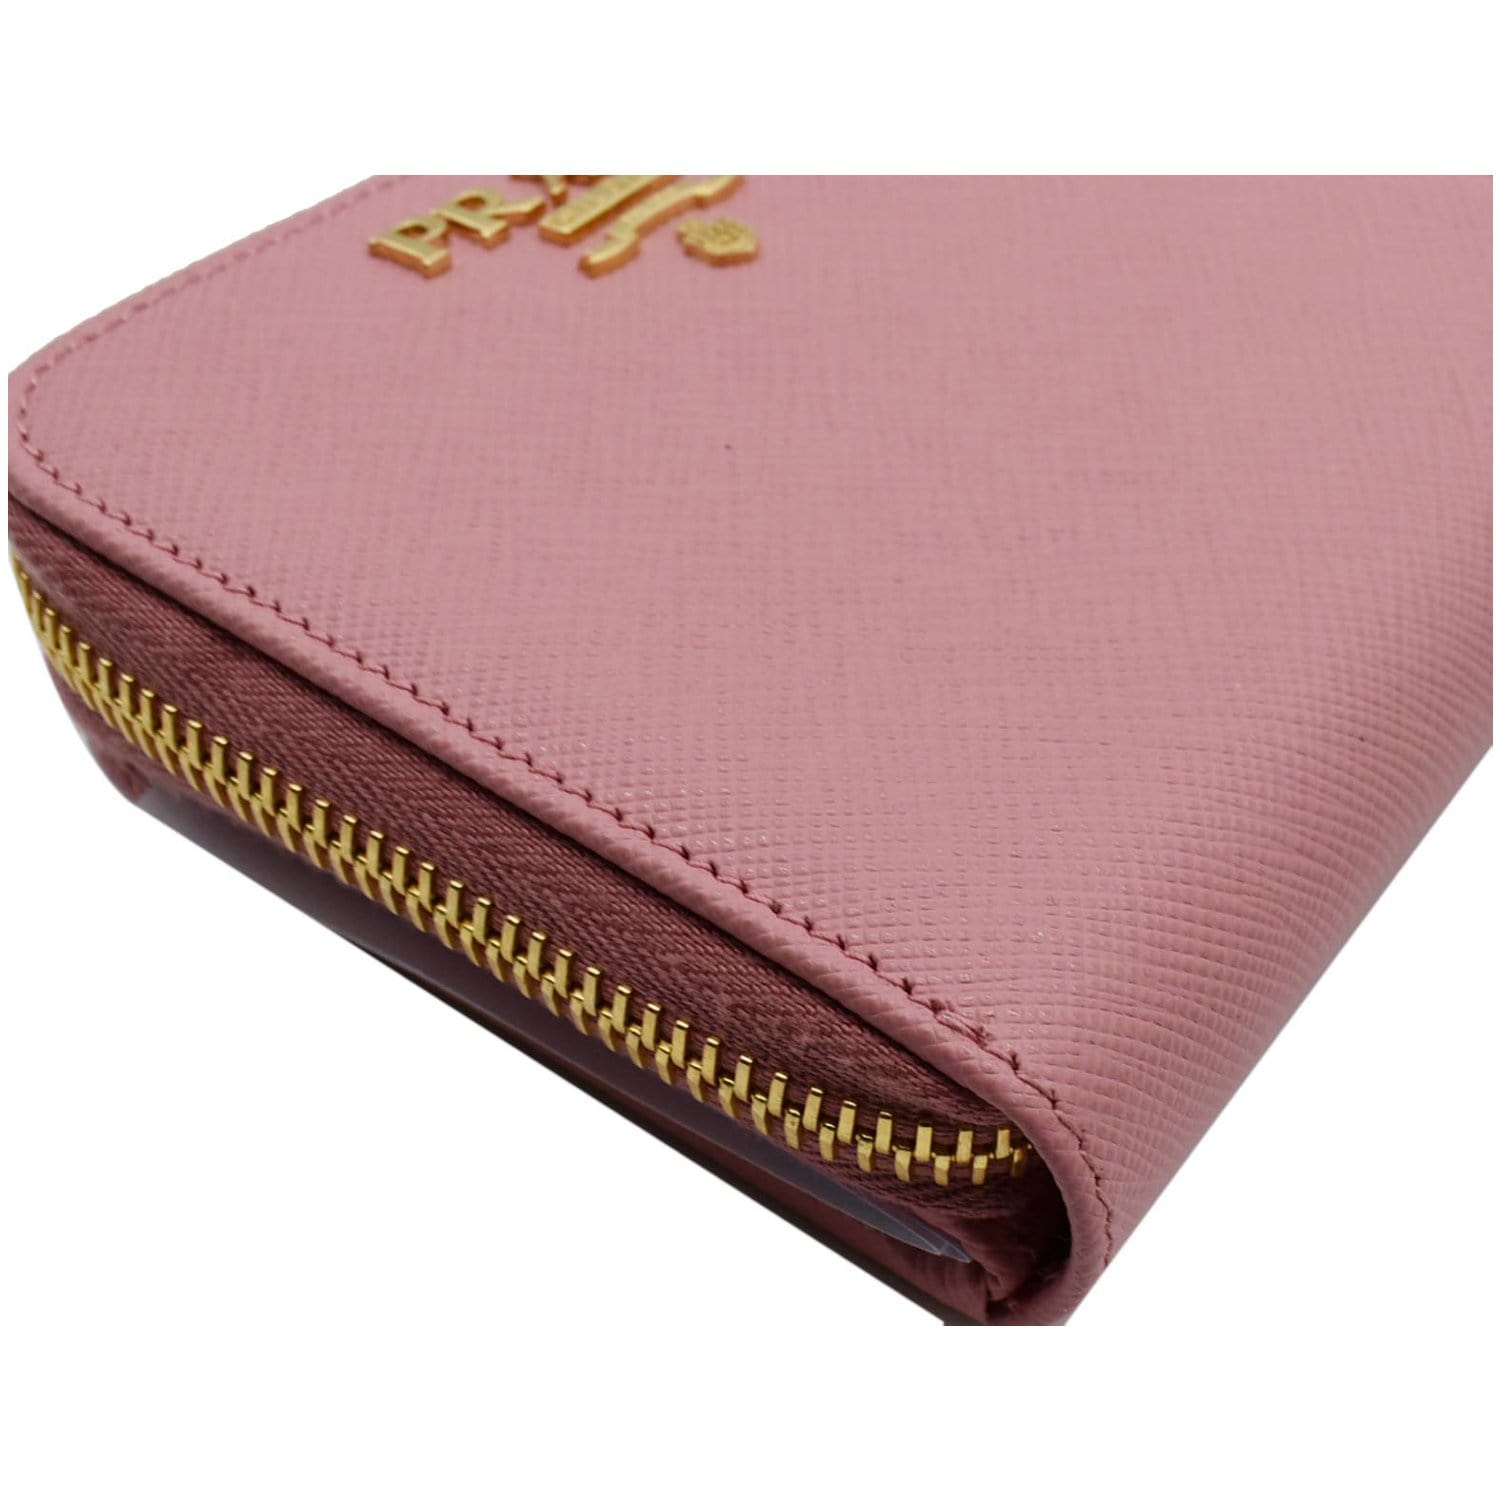 PRADA Small Saffiano Leather Zip Around Wallet Pink- 20% OFF